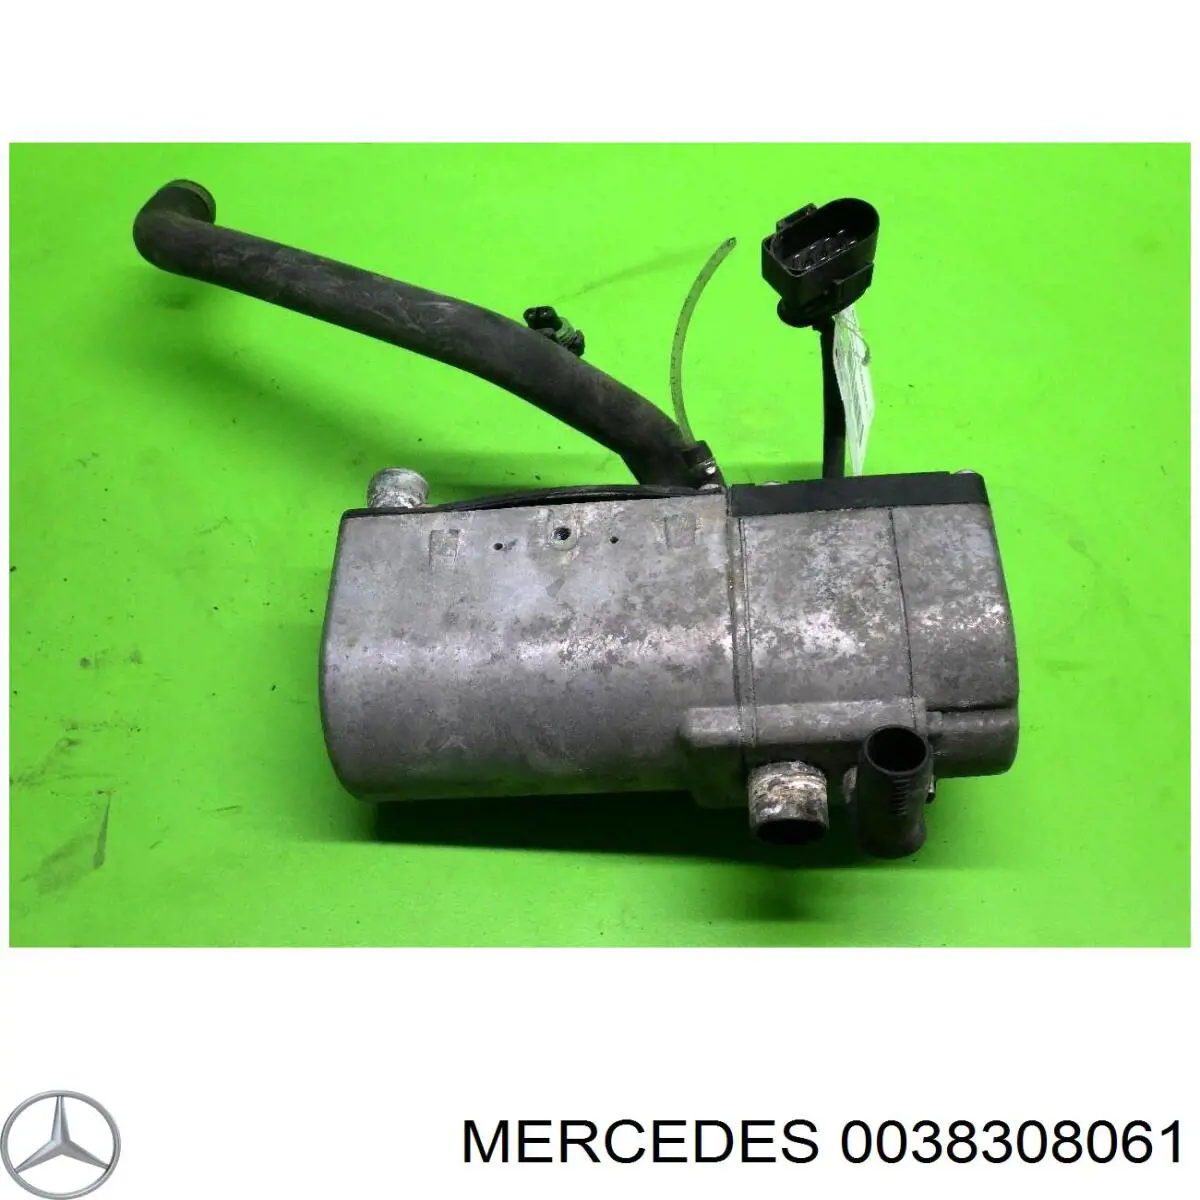 0038308061 Mercedes